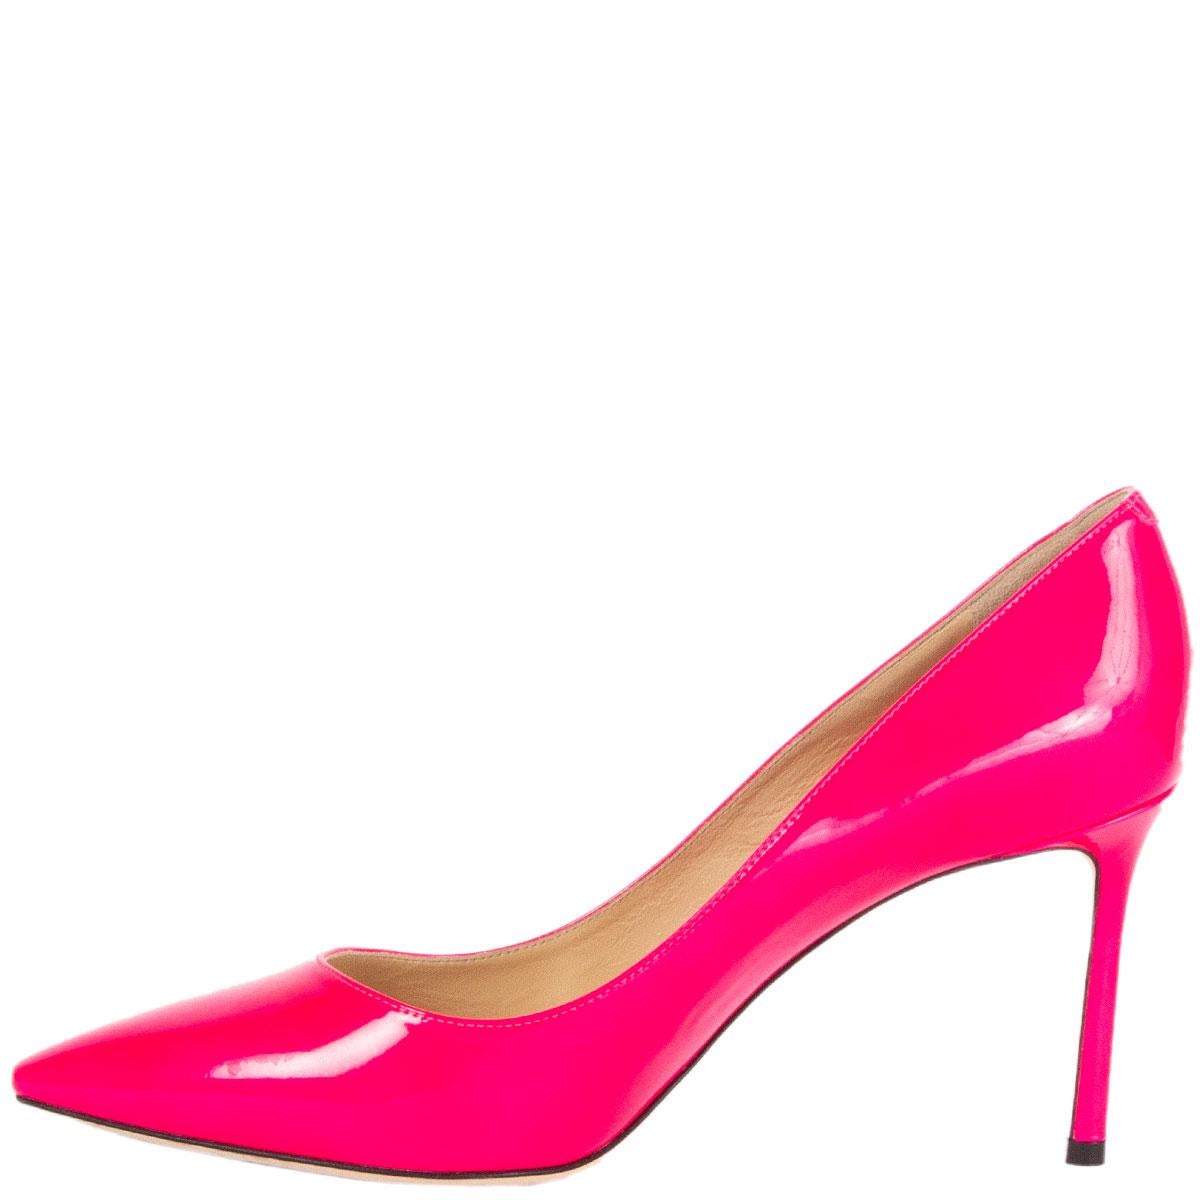 JIMMY CHOO Heißes rosa Lackleder ROMY 85 POINTED-TOE Pumps Schuhe 39,5 (Pink) im Angebot